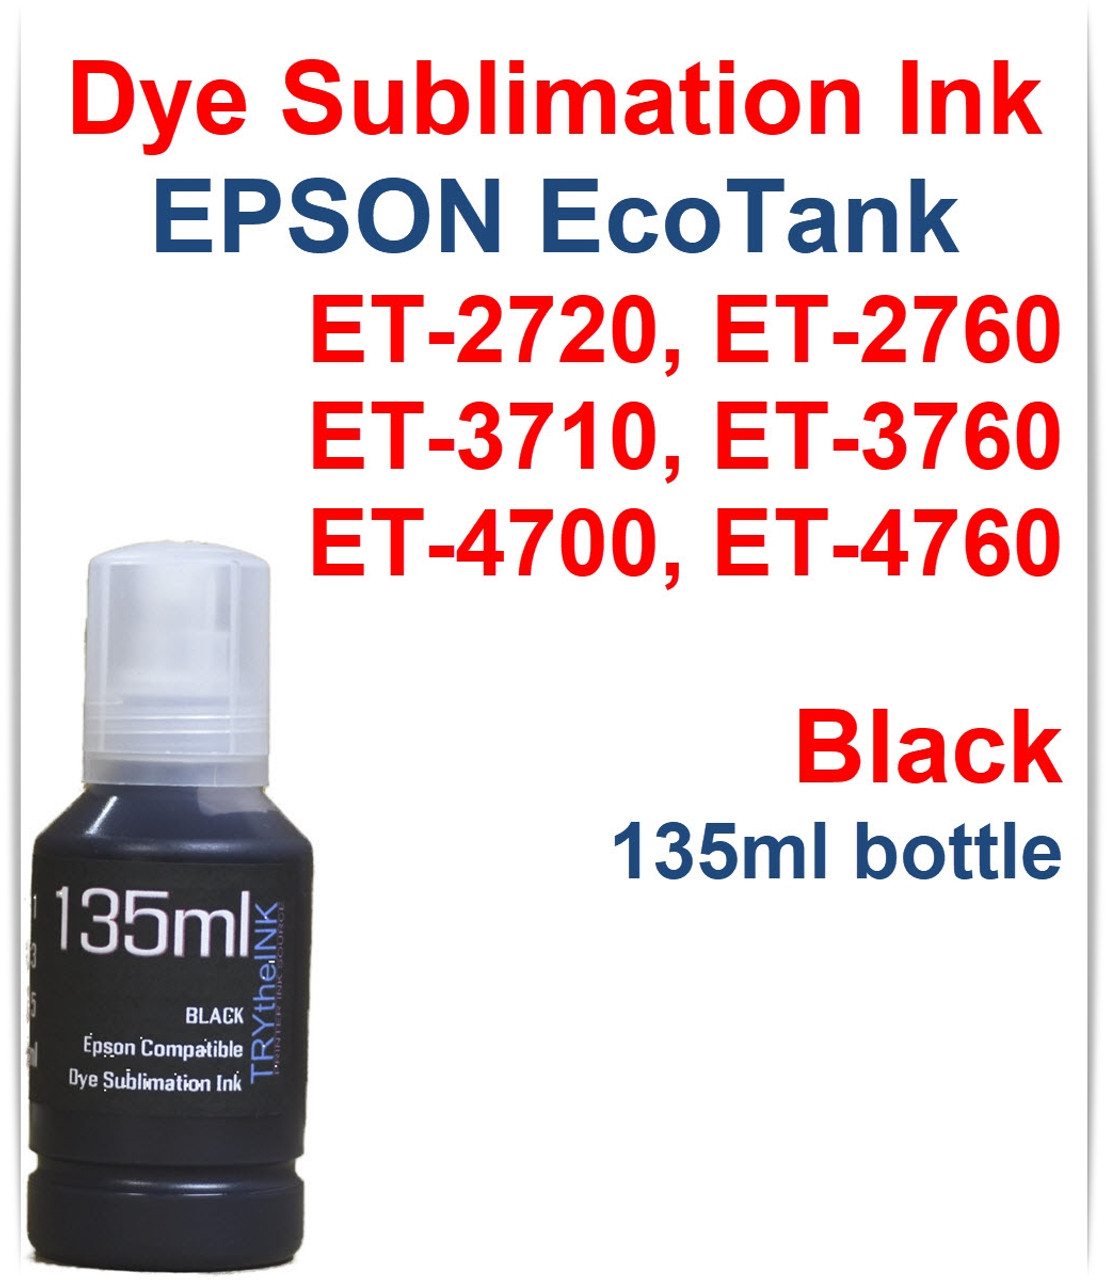 Black 135ml bottle Dye Sublimation Ink for EPSON EcoTank ET-2720 ET-2760 Printers